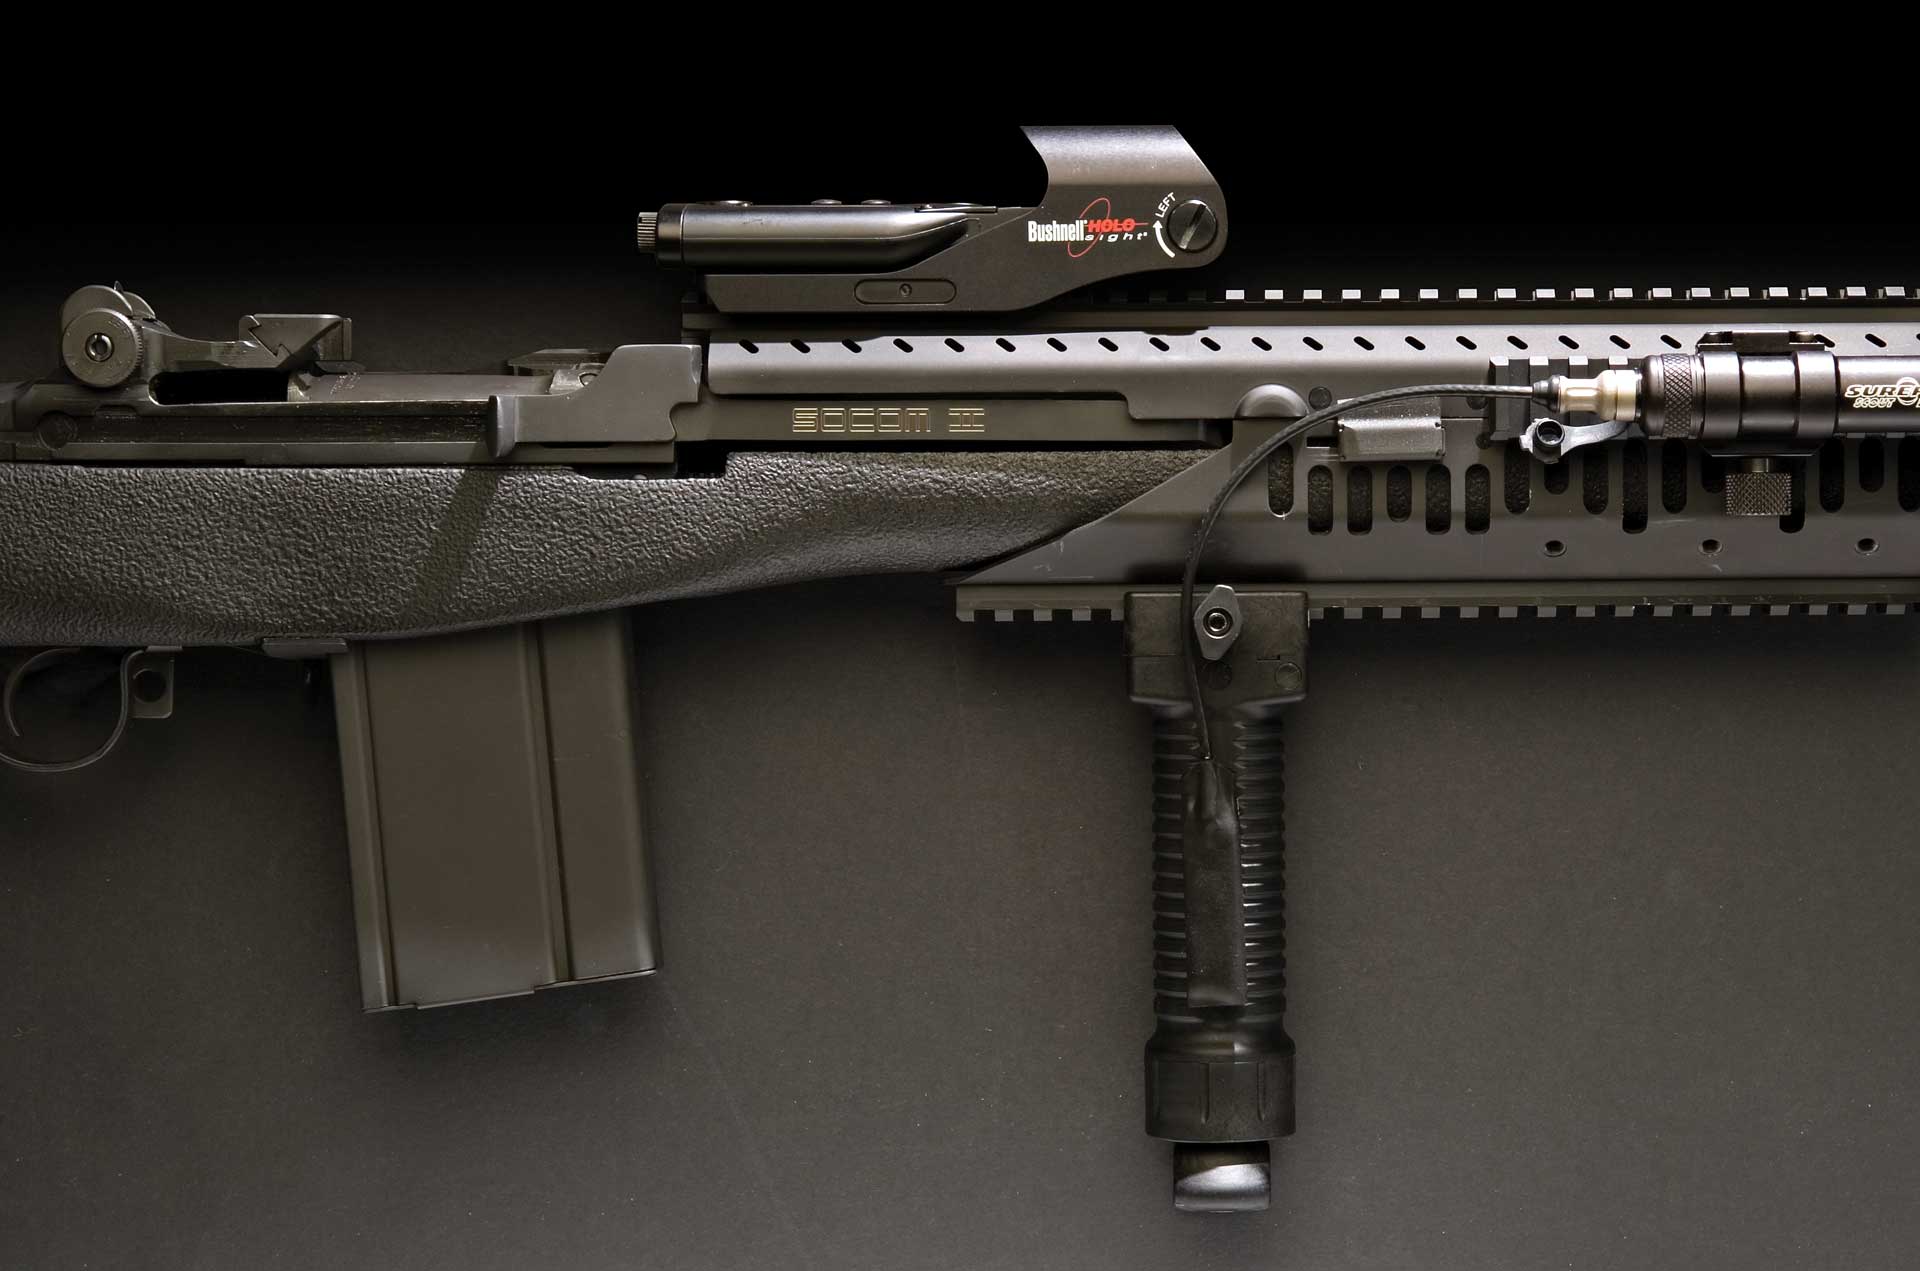 Right-side springfield armory socom ii action picatinny rail foregrip optic detachable box magazine black semi-automatic rifle dark background